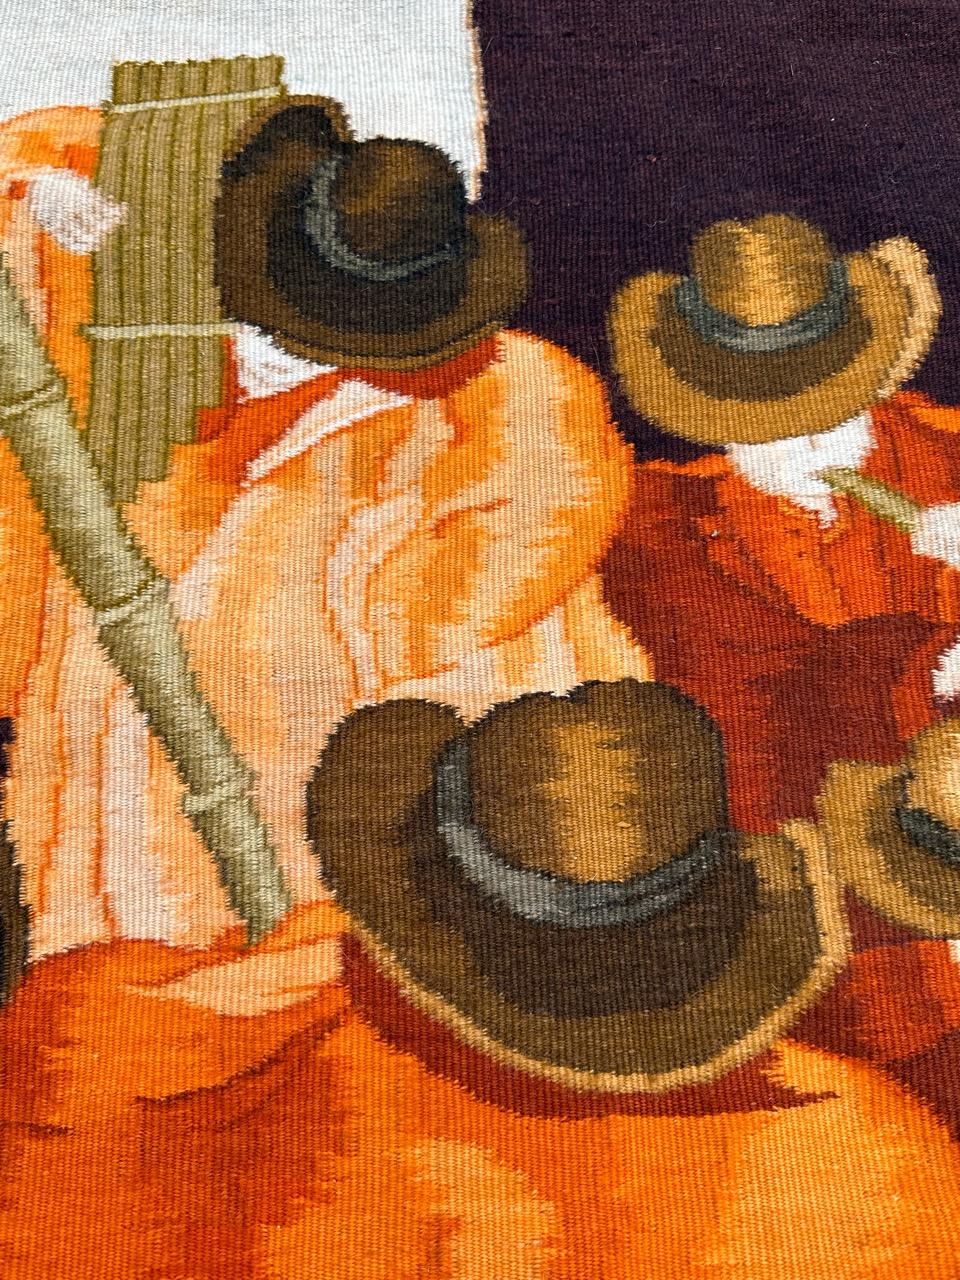 bolivian tapestry